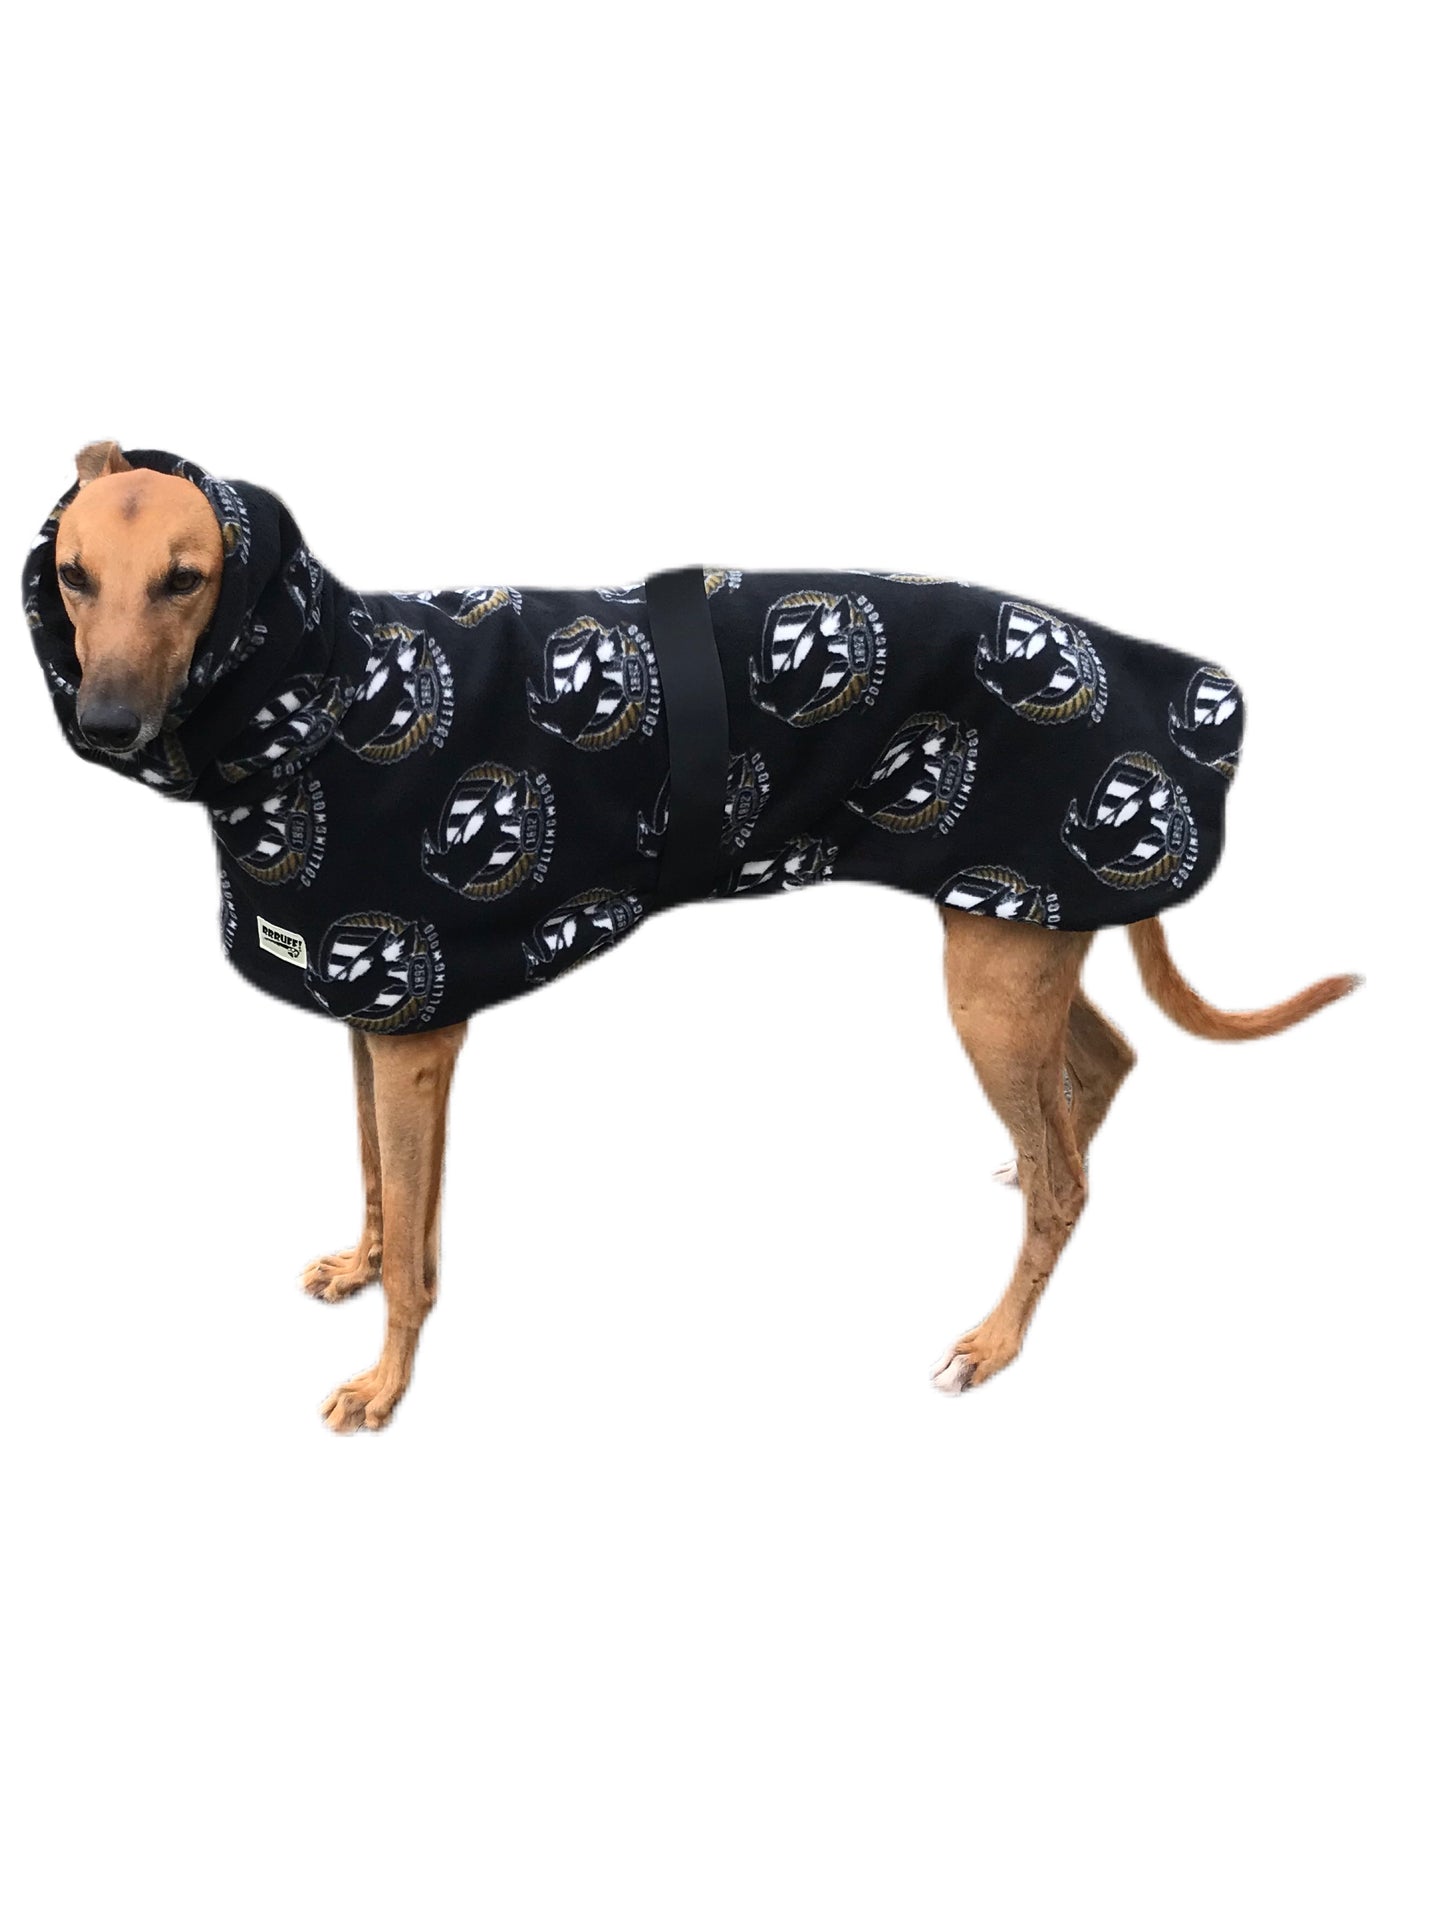 AFL Collingwood inspired greyhound coat deluxe style double polar fleece washable